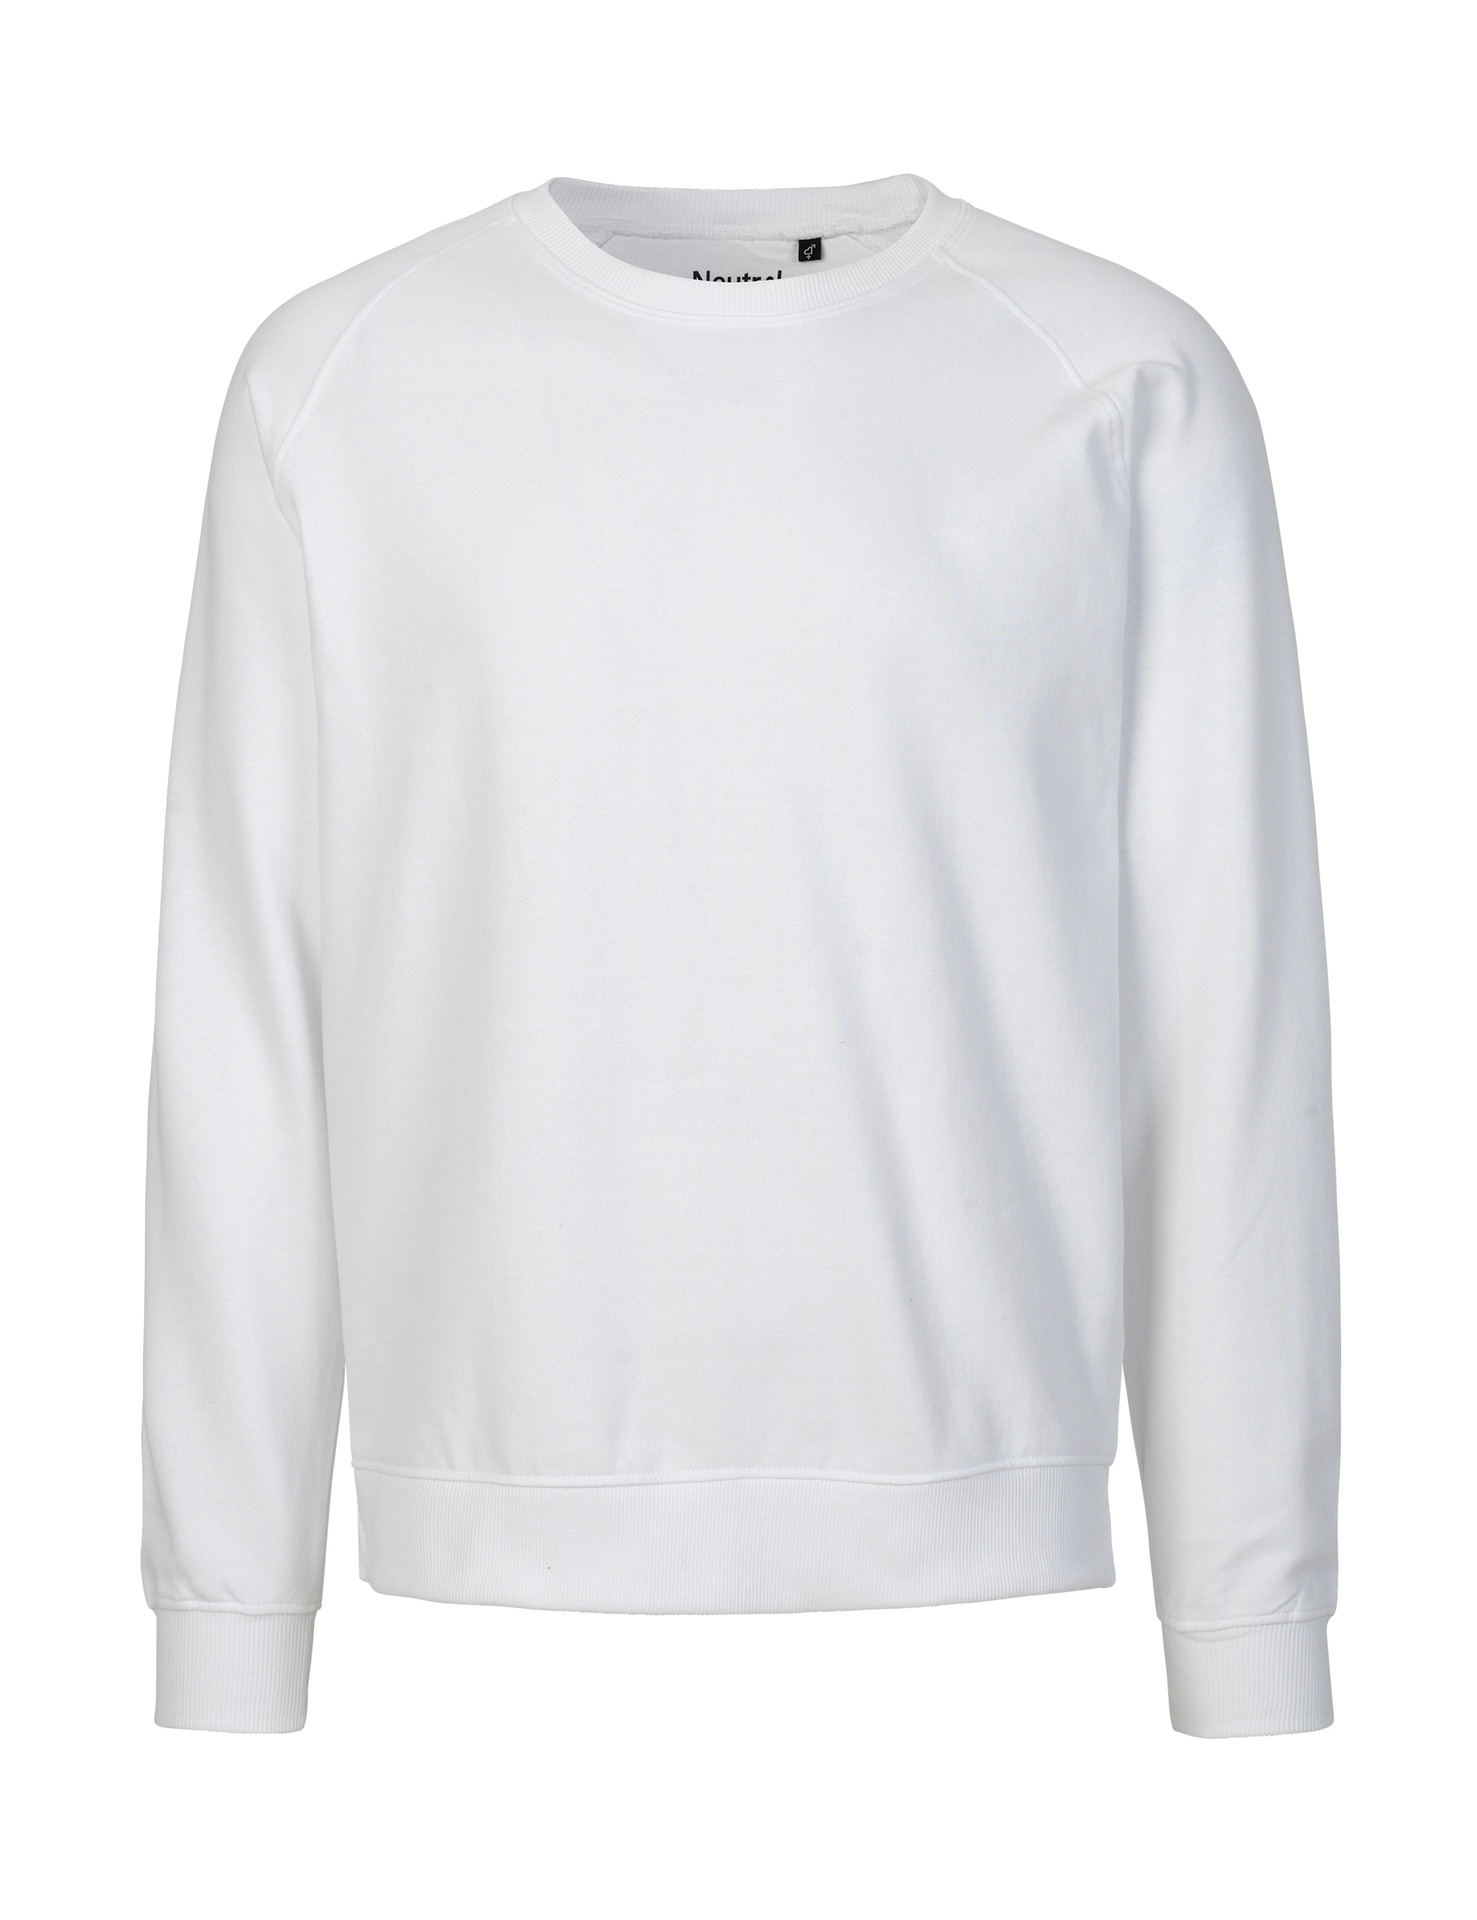 [PR/02653] Unisex Sweatshirt (White 01, S)